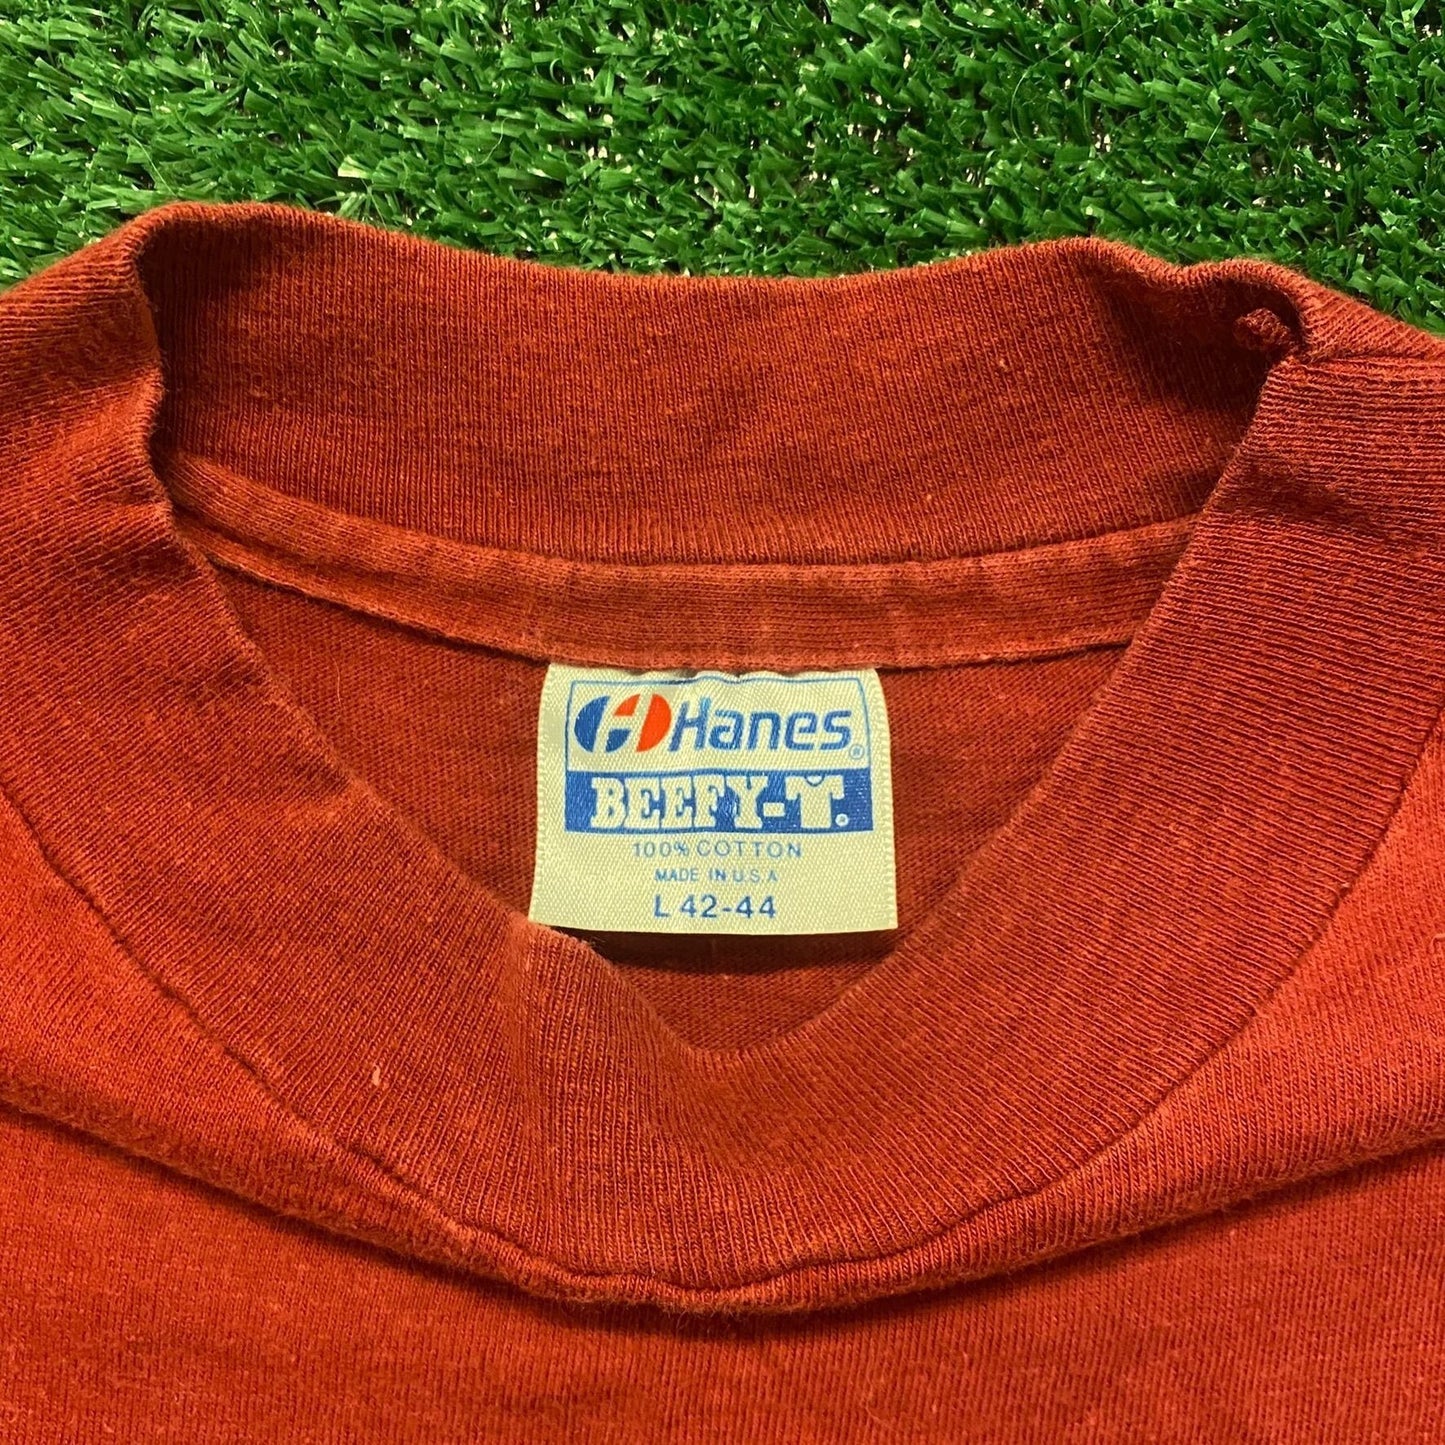 Vintage 80s Monterey California Single Stitch T-Shirt